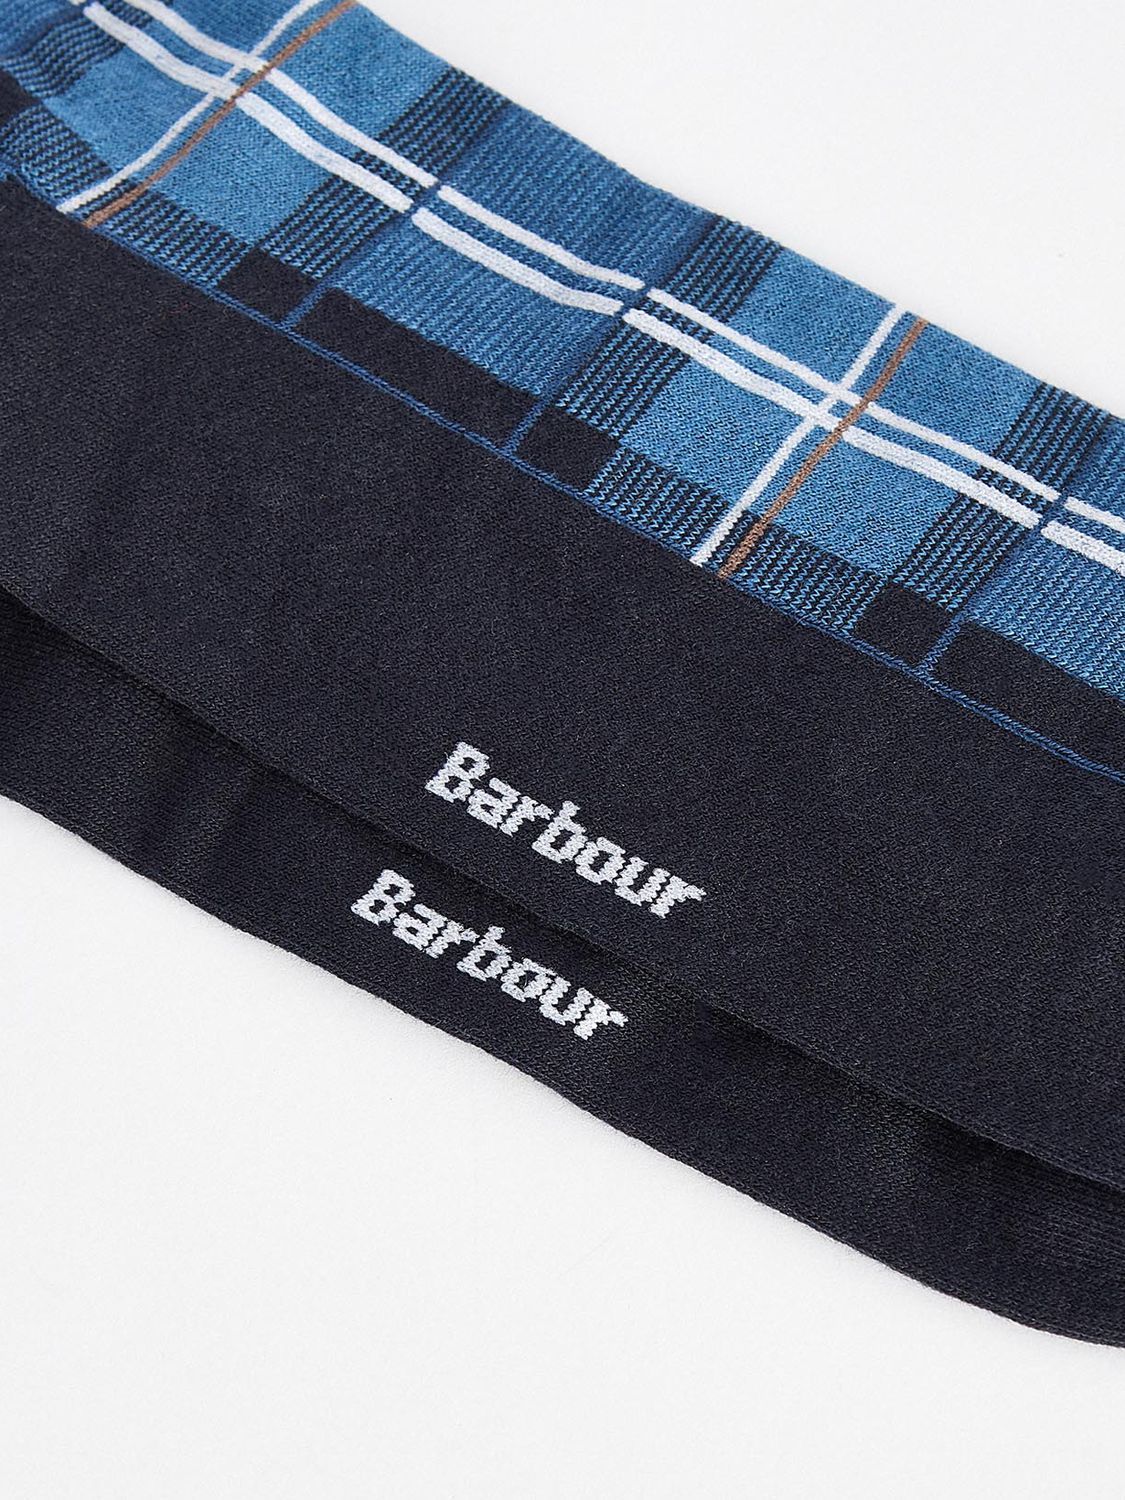 Barbour Blyth Tartan Socks, Berwick Blue, L